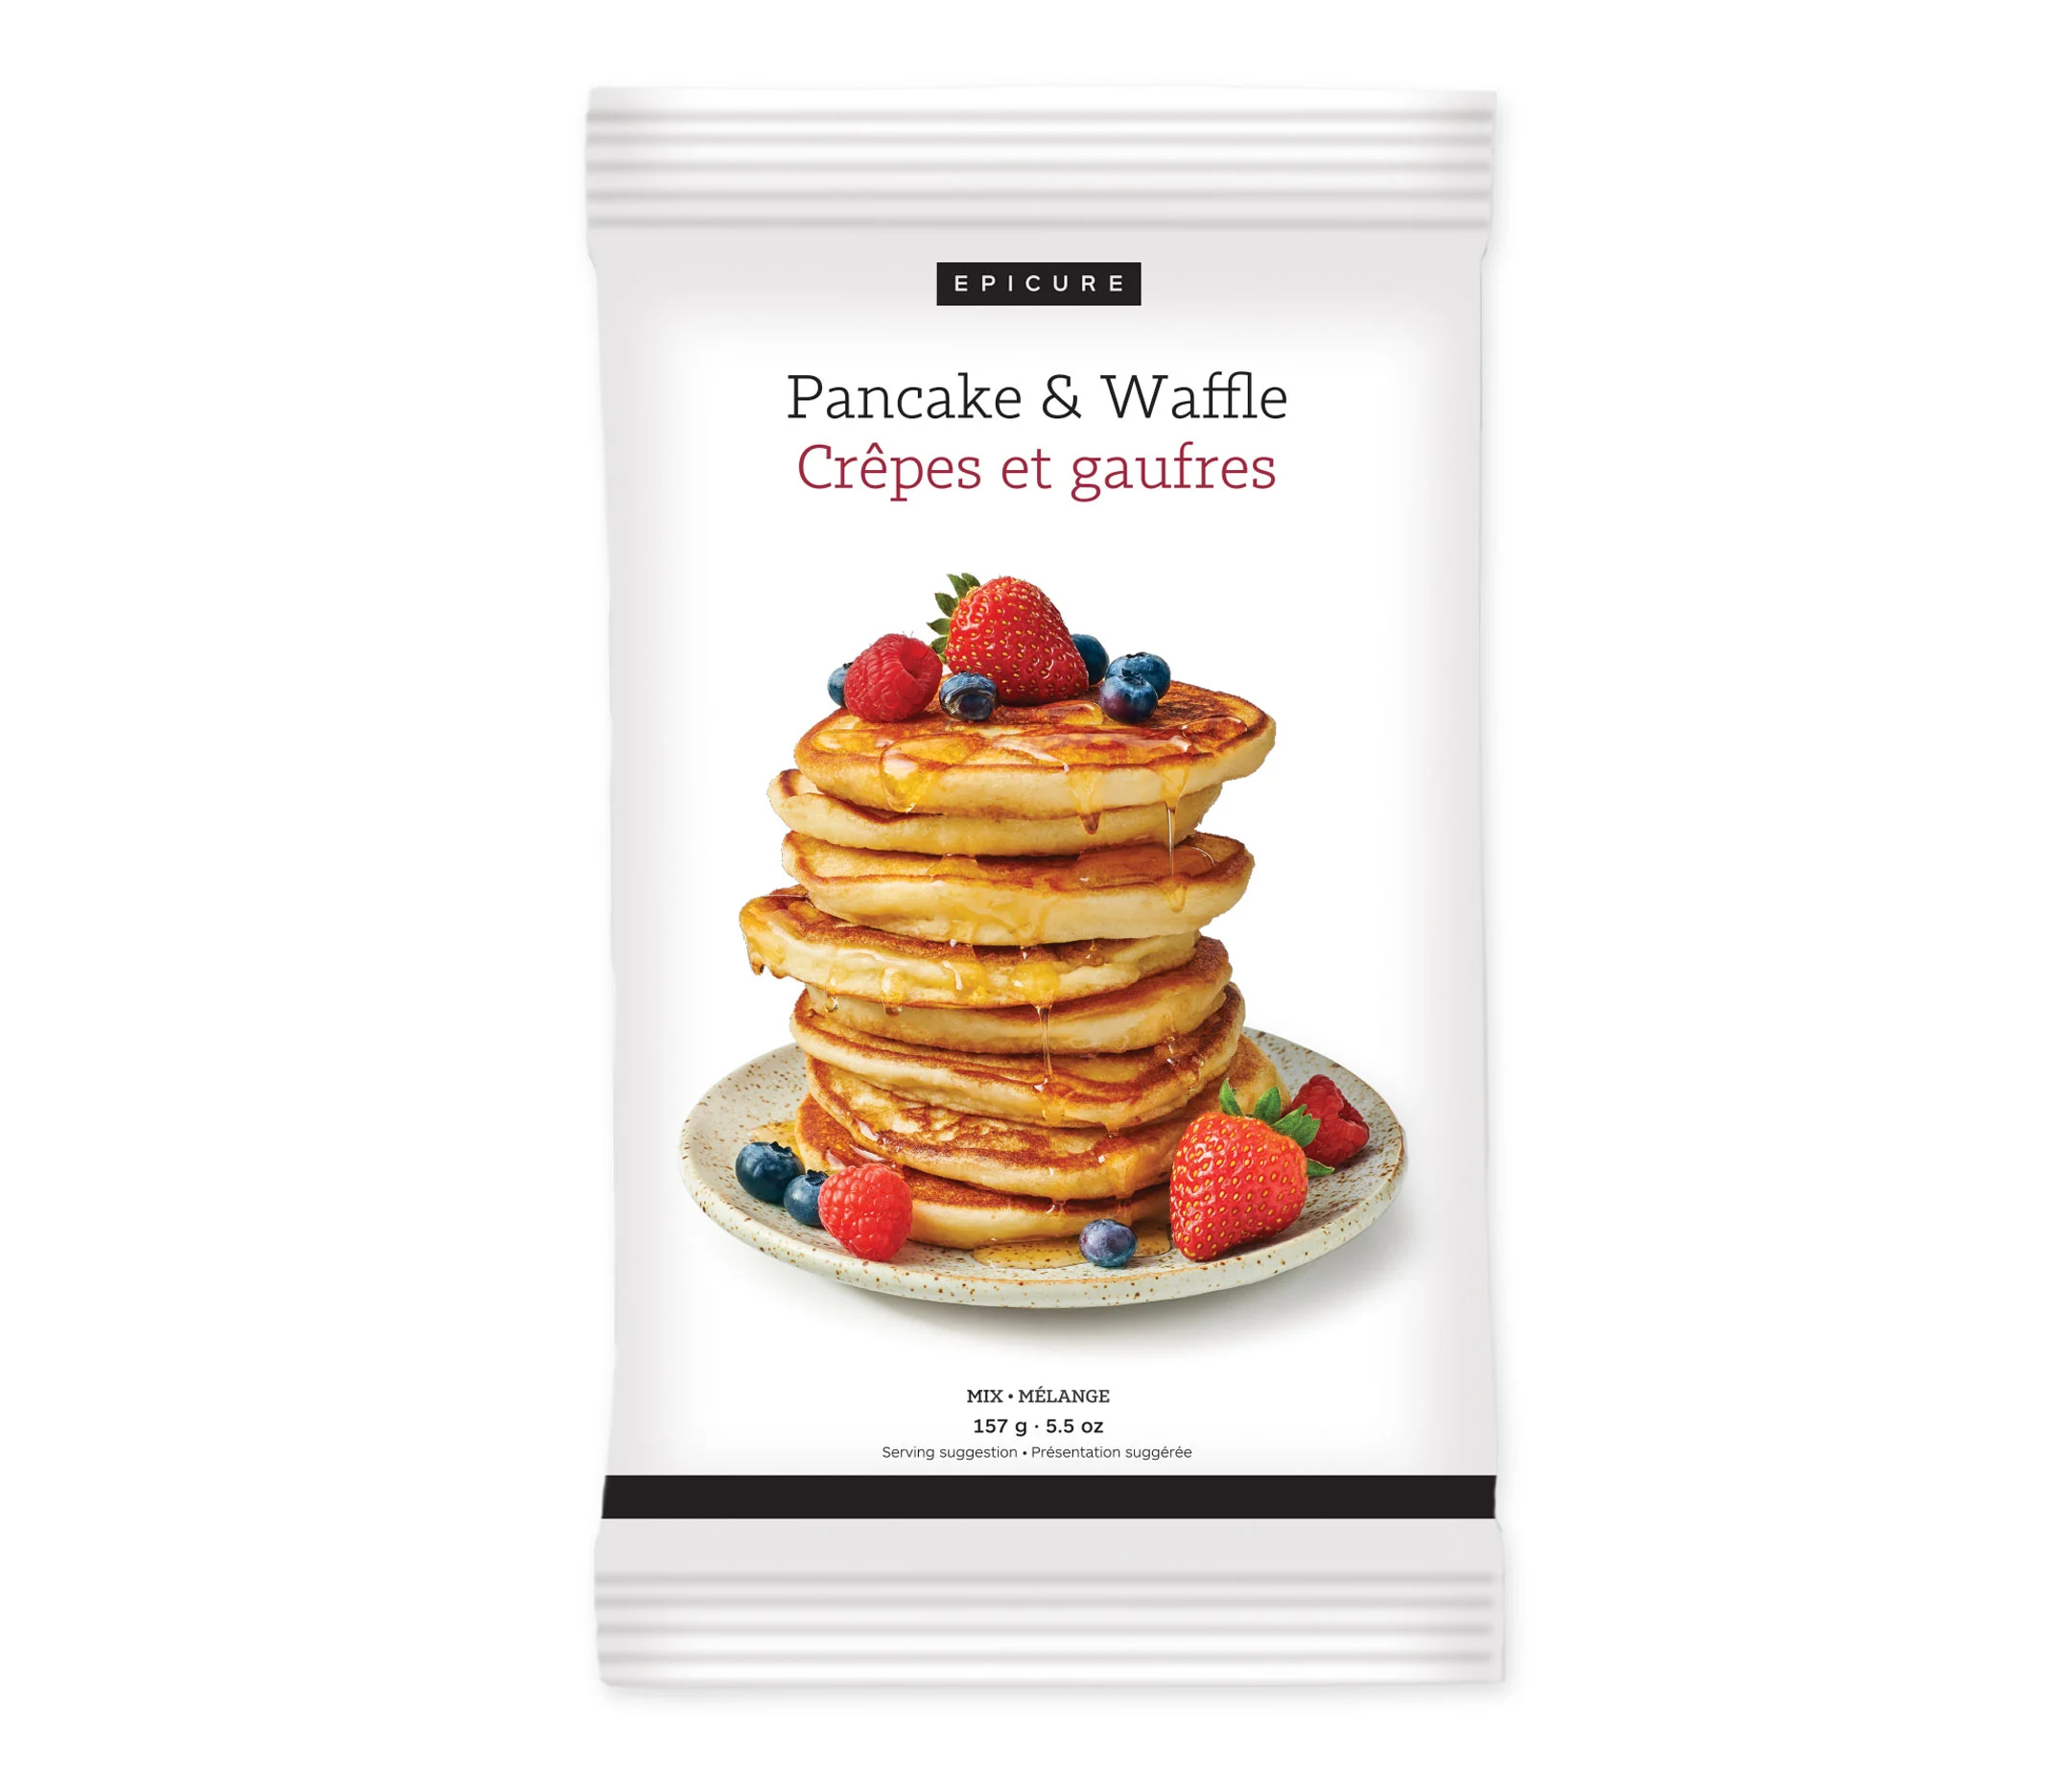 Pancake & Waffle Mix (Pack of 3)